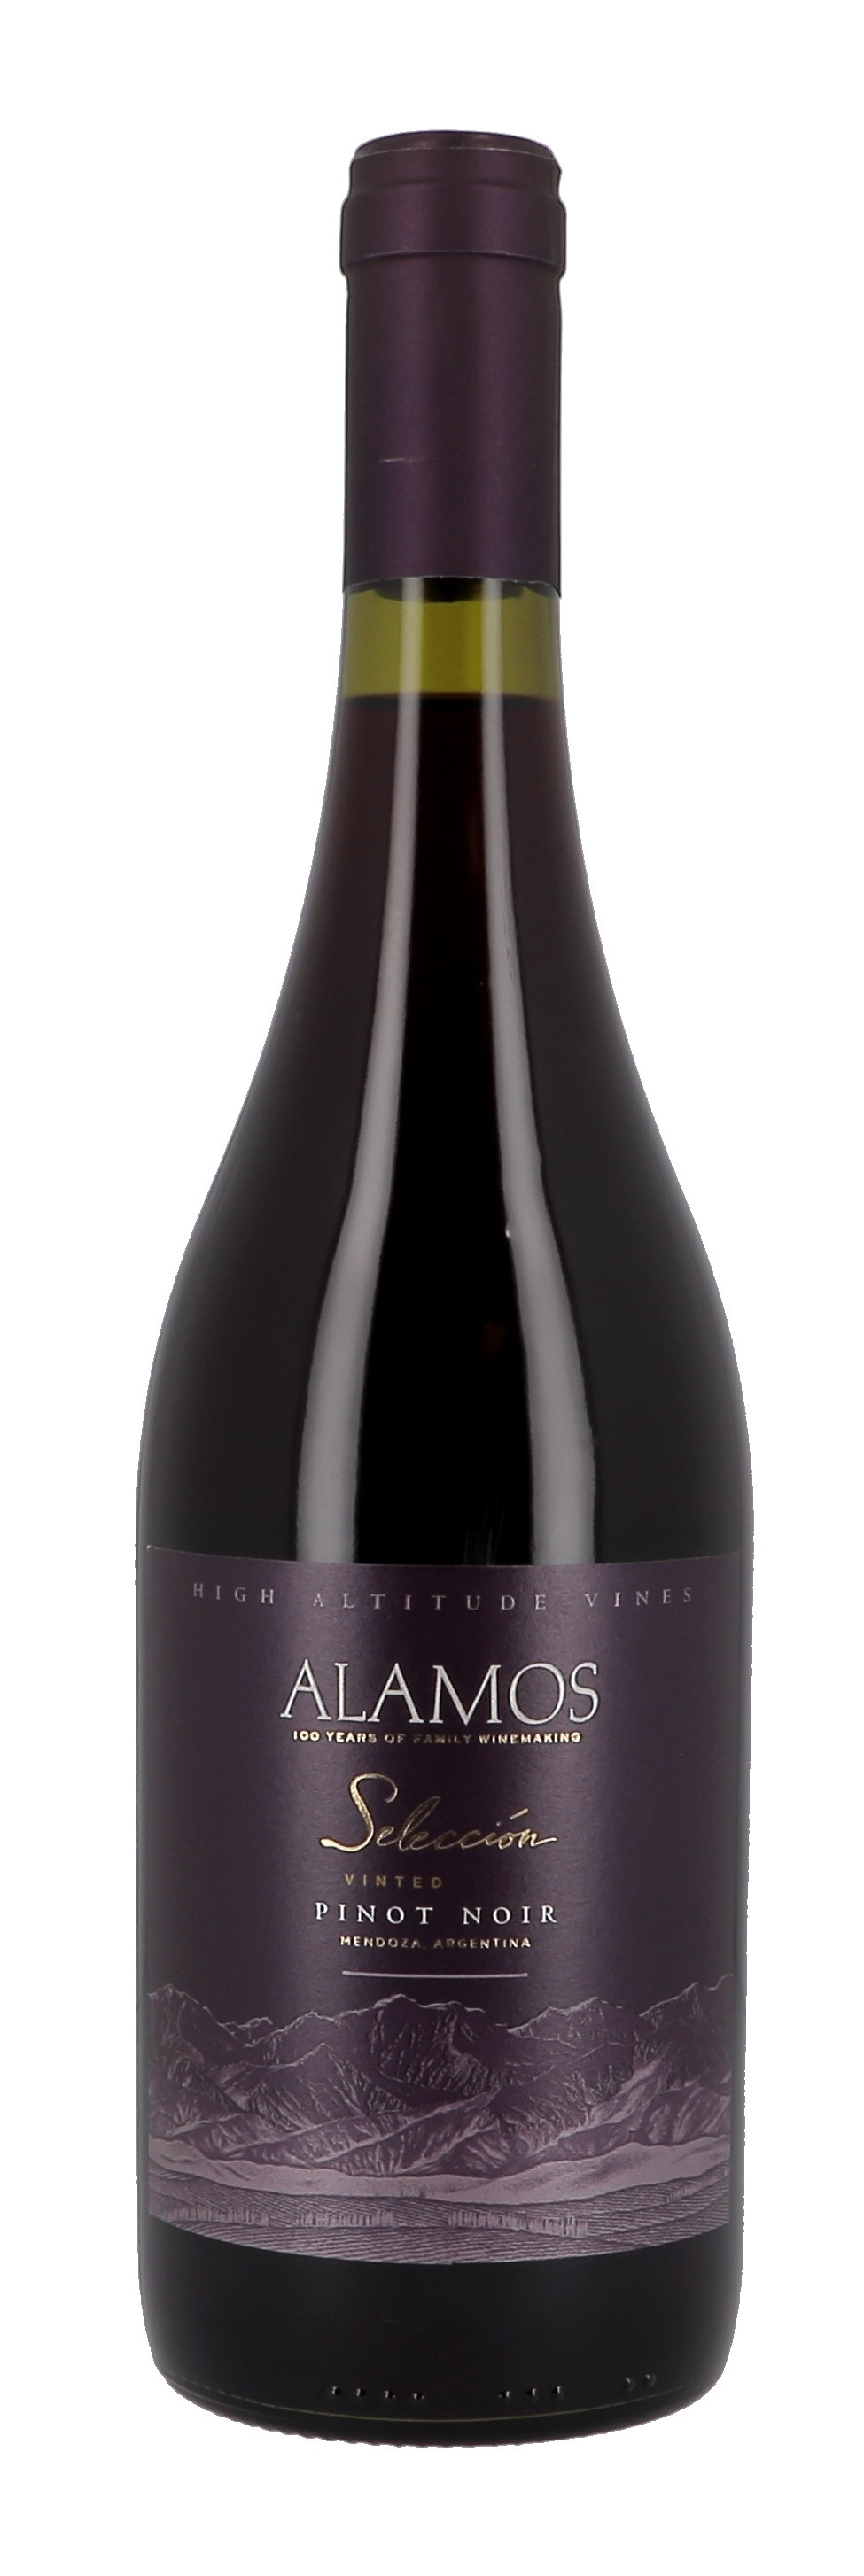 Alamos Seleccion Pinot Noir 75cl 2018 Bodega Catena Zatana